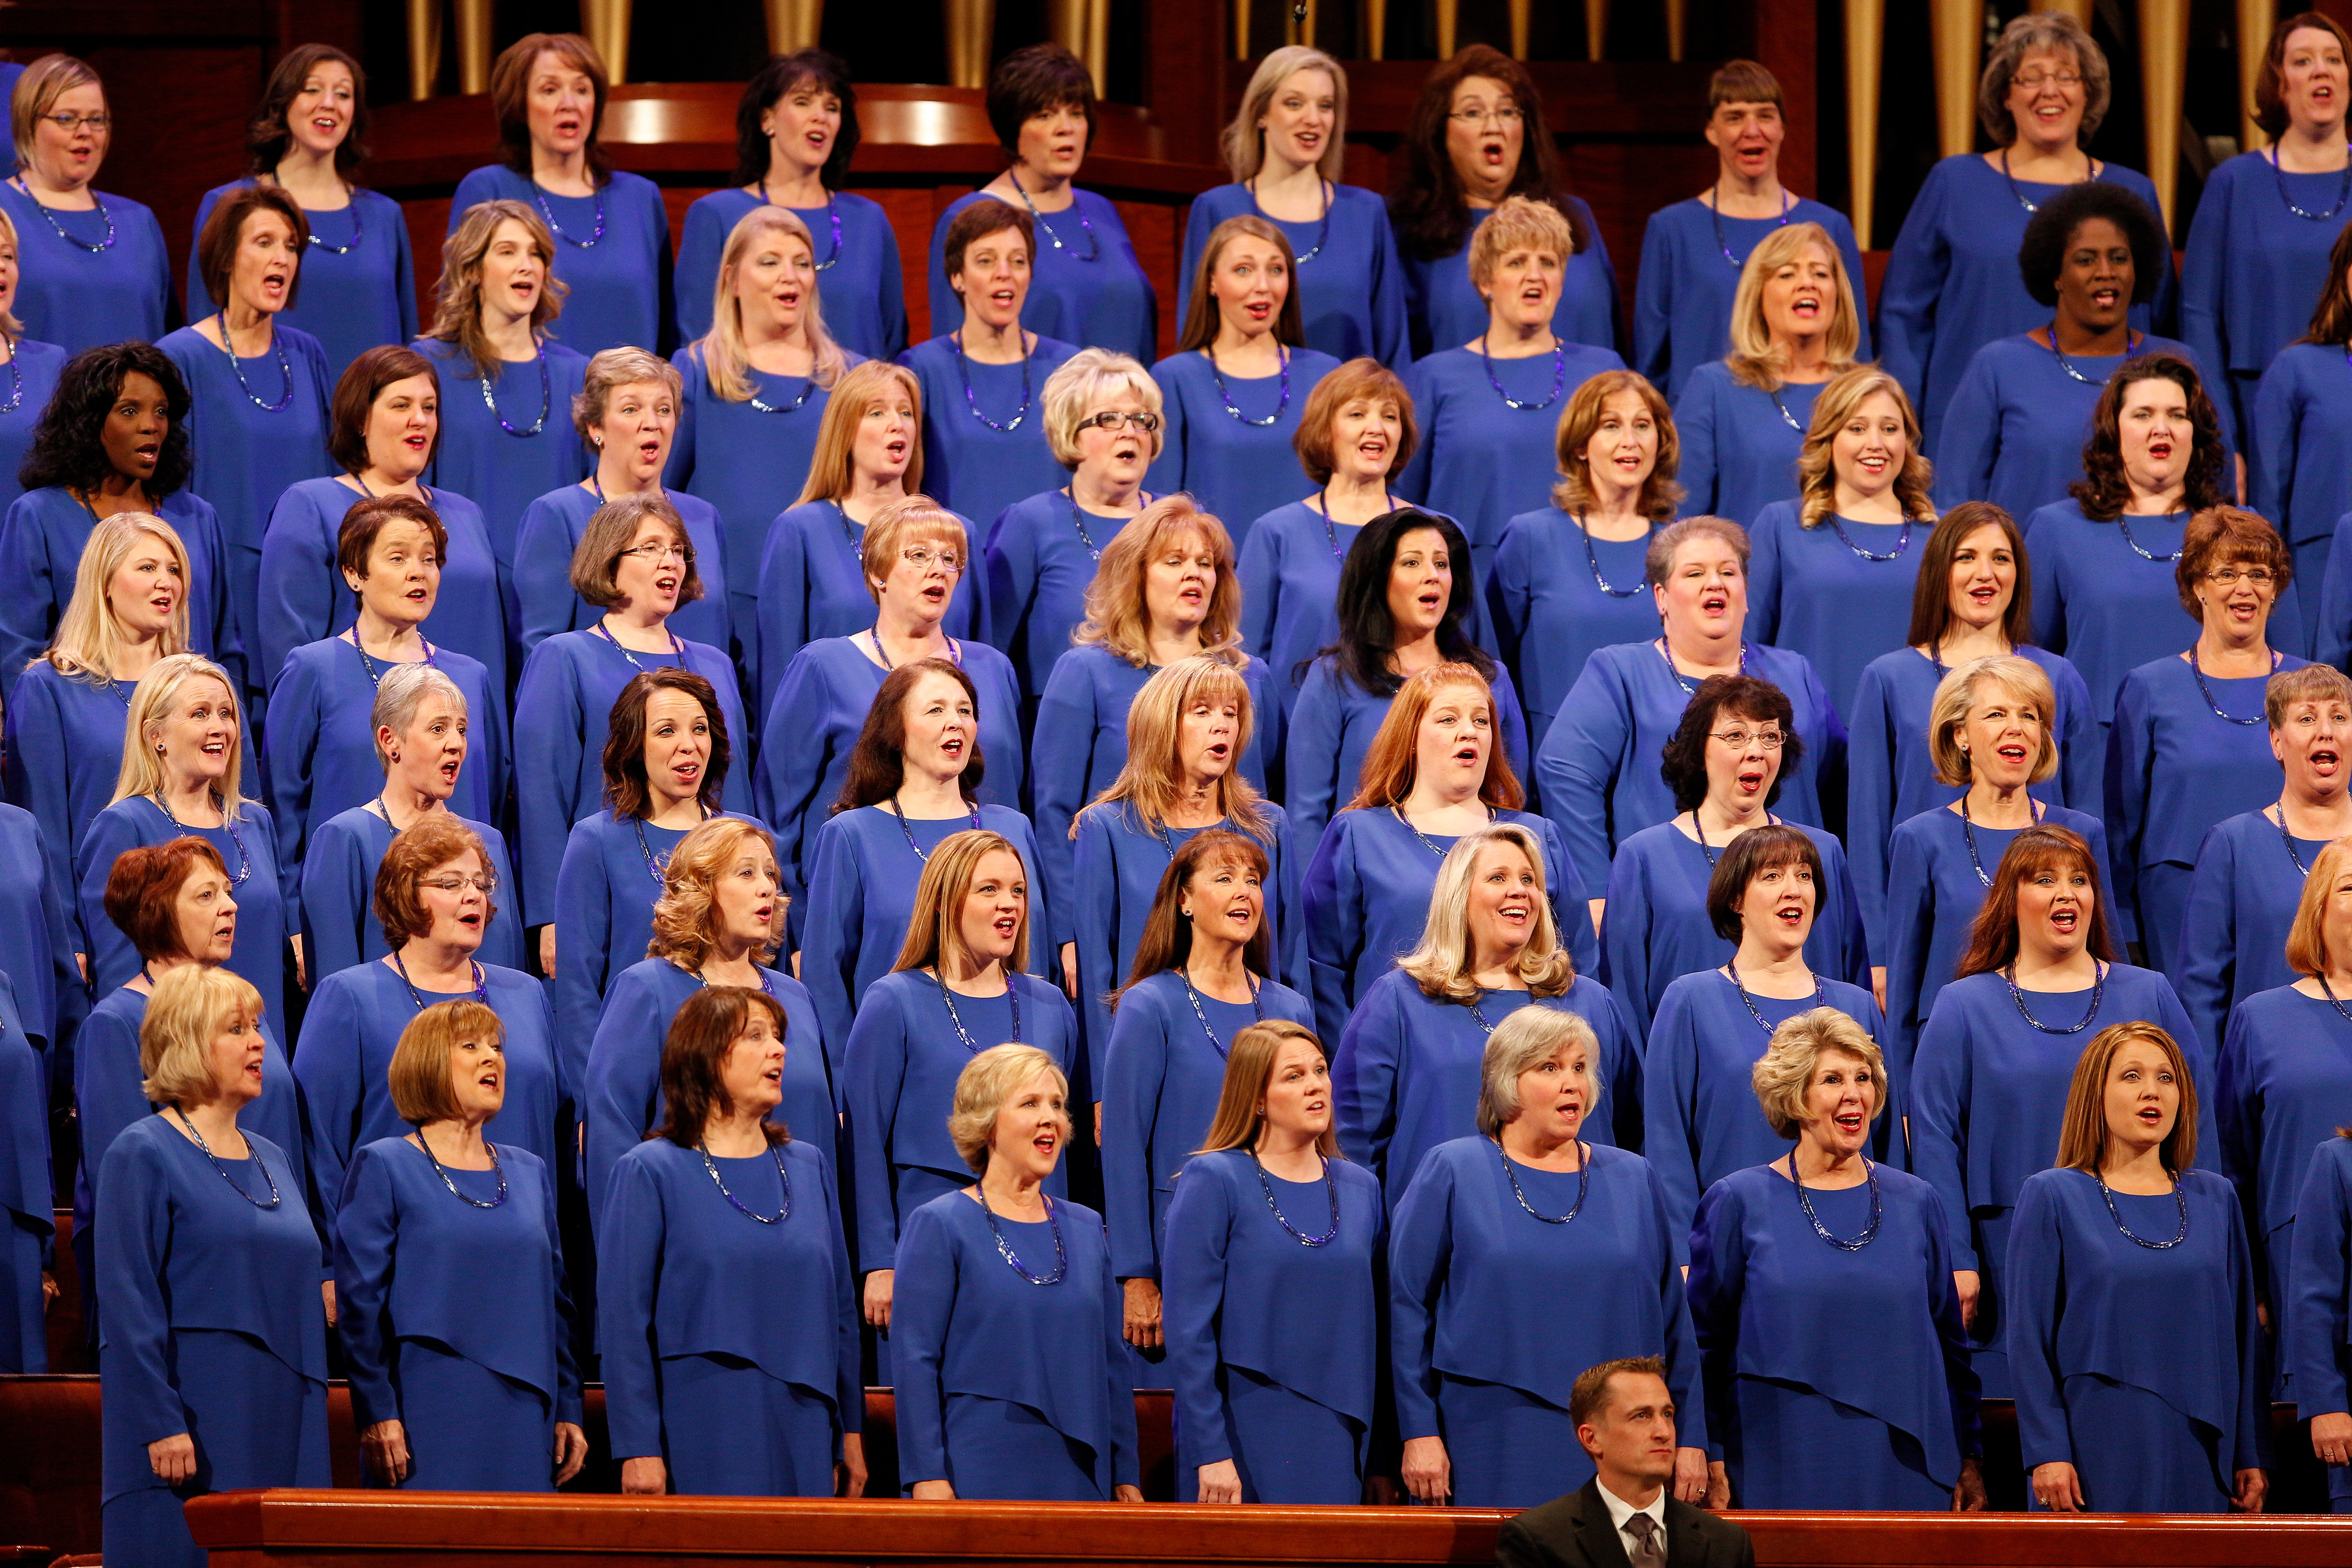 mormon tabernacle choir sat am oct 2013